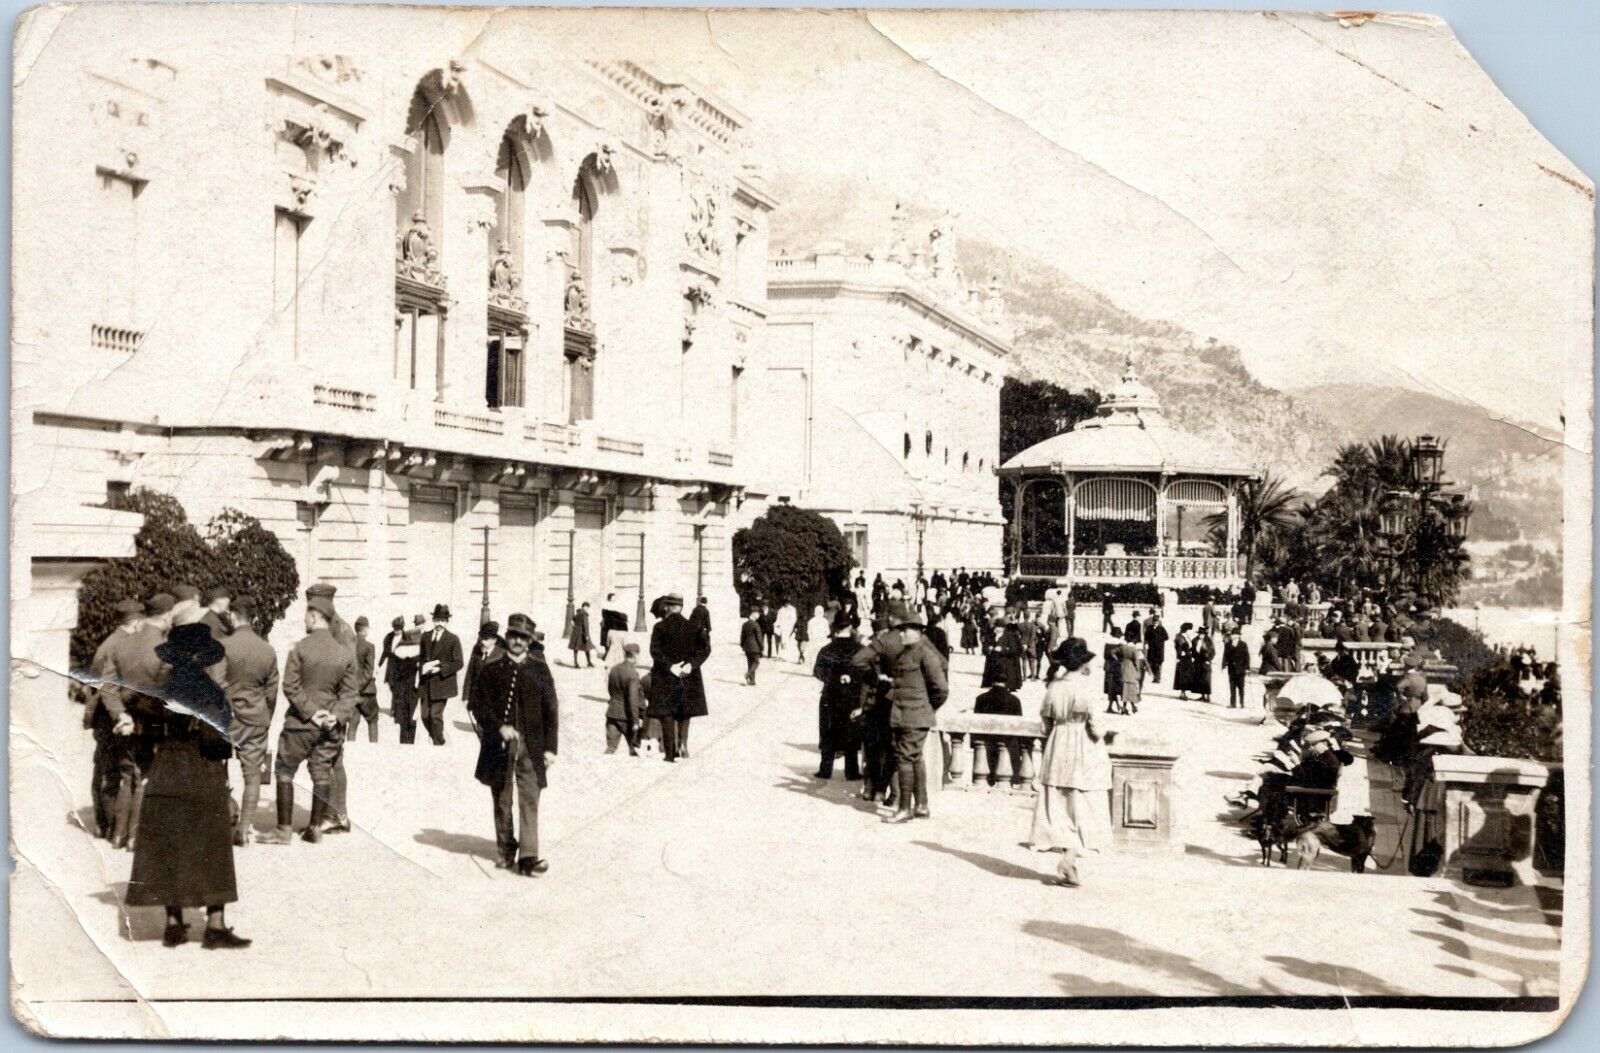 RPPC City scene with Gazebo World War I era with soliders